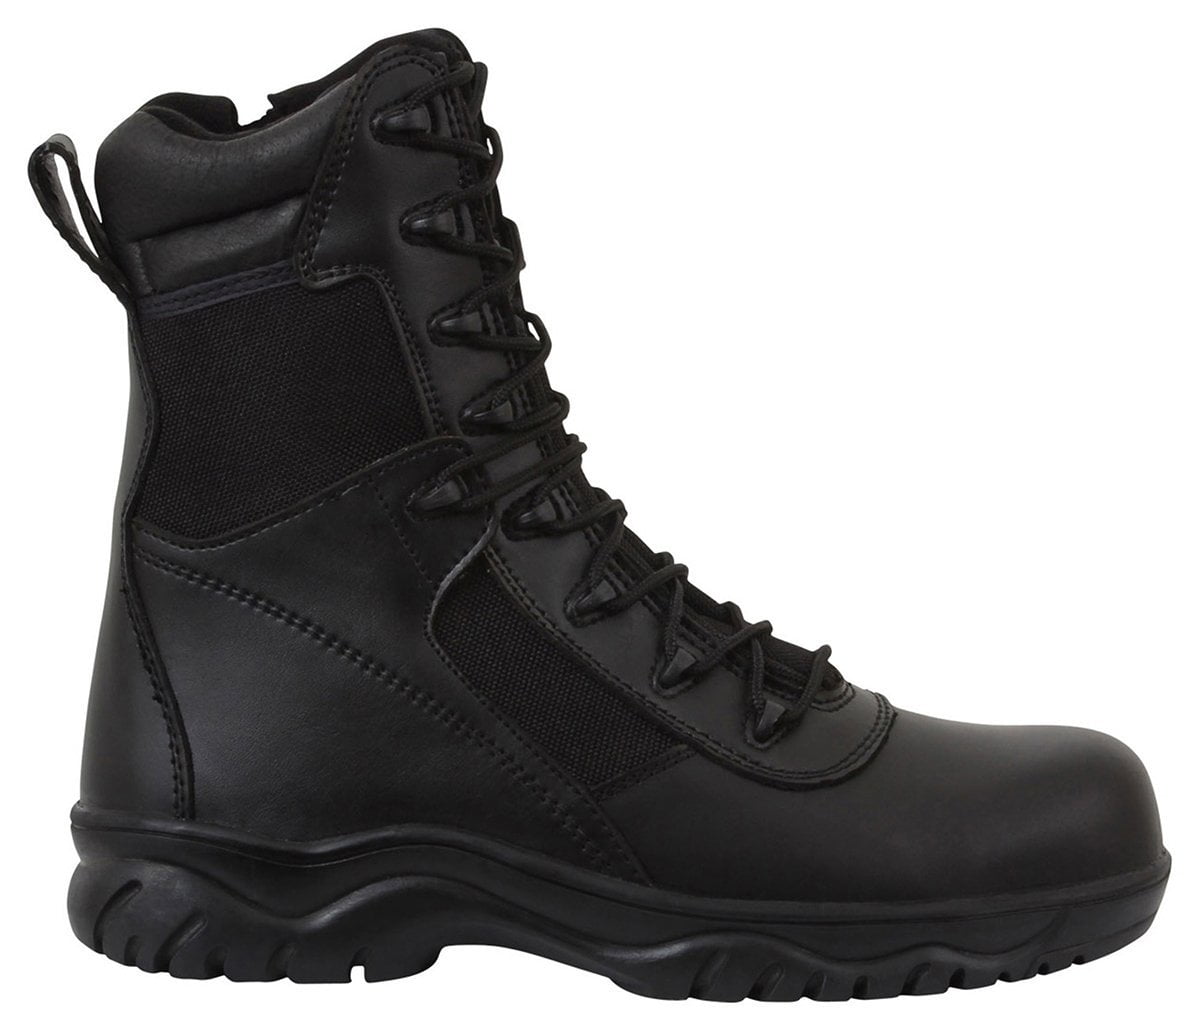 black steel toe boots with side zipper